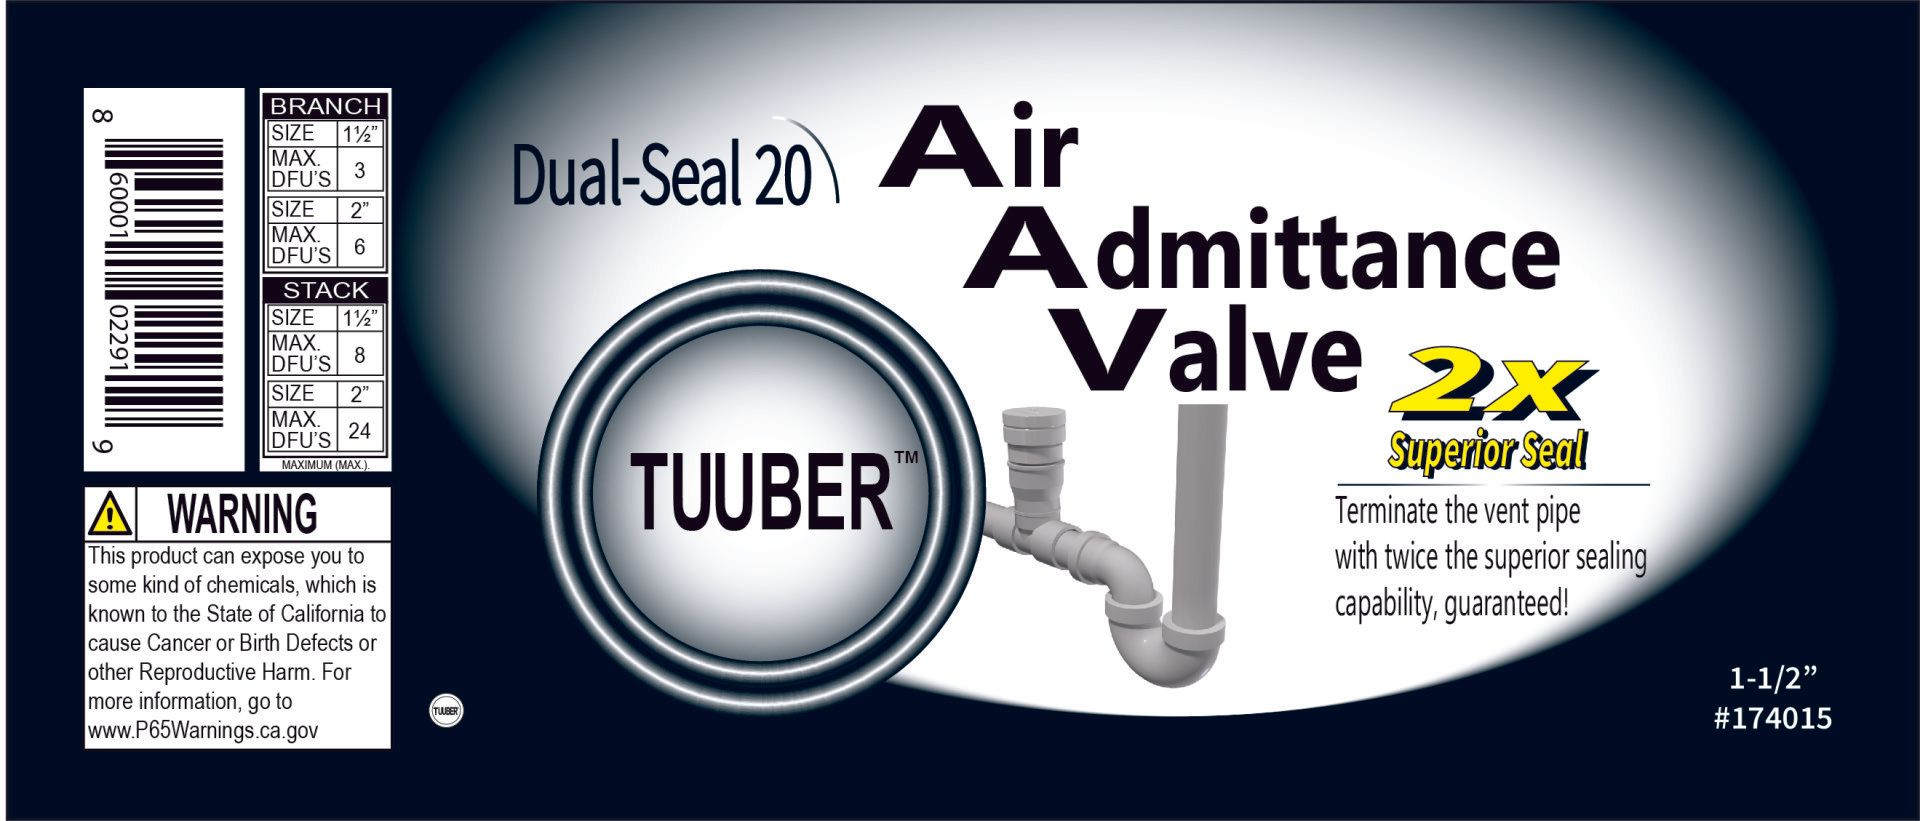 1-1/2 air admittance valve dfu information and insert